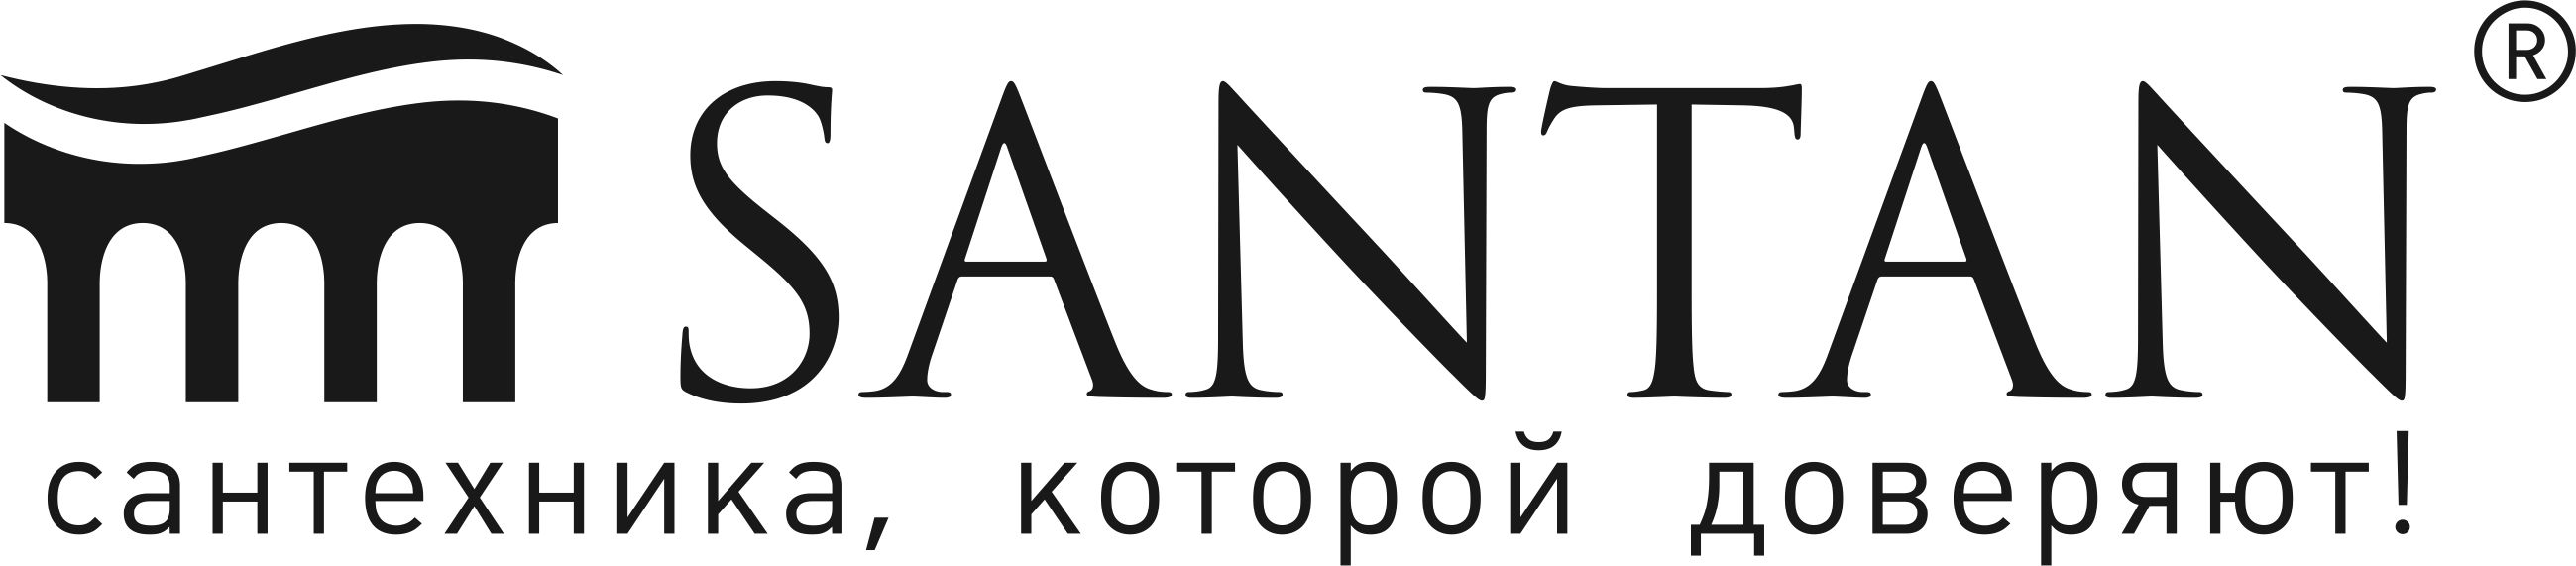 Santan_logo.jpg